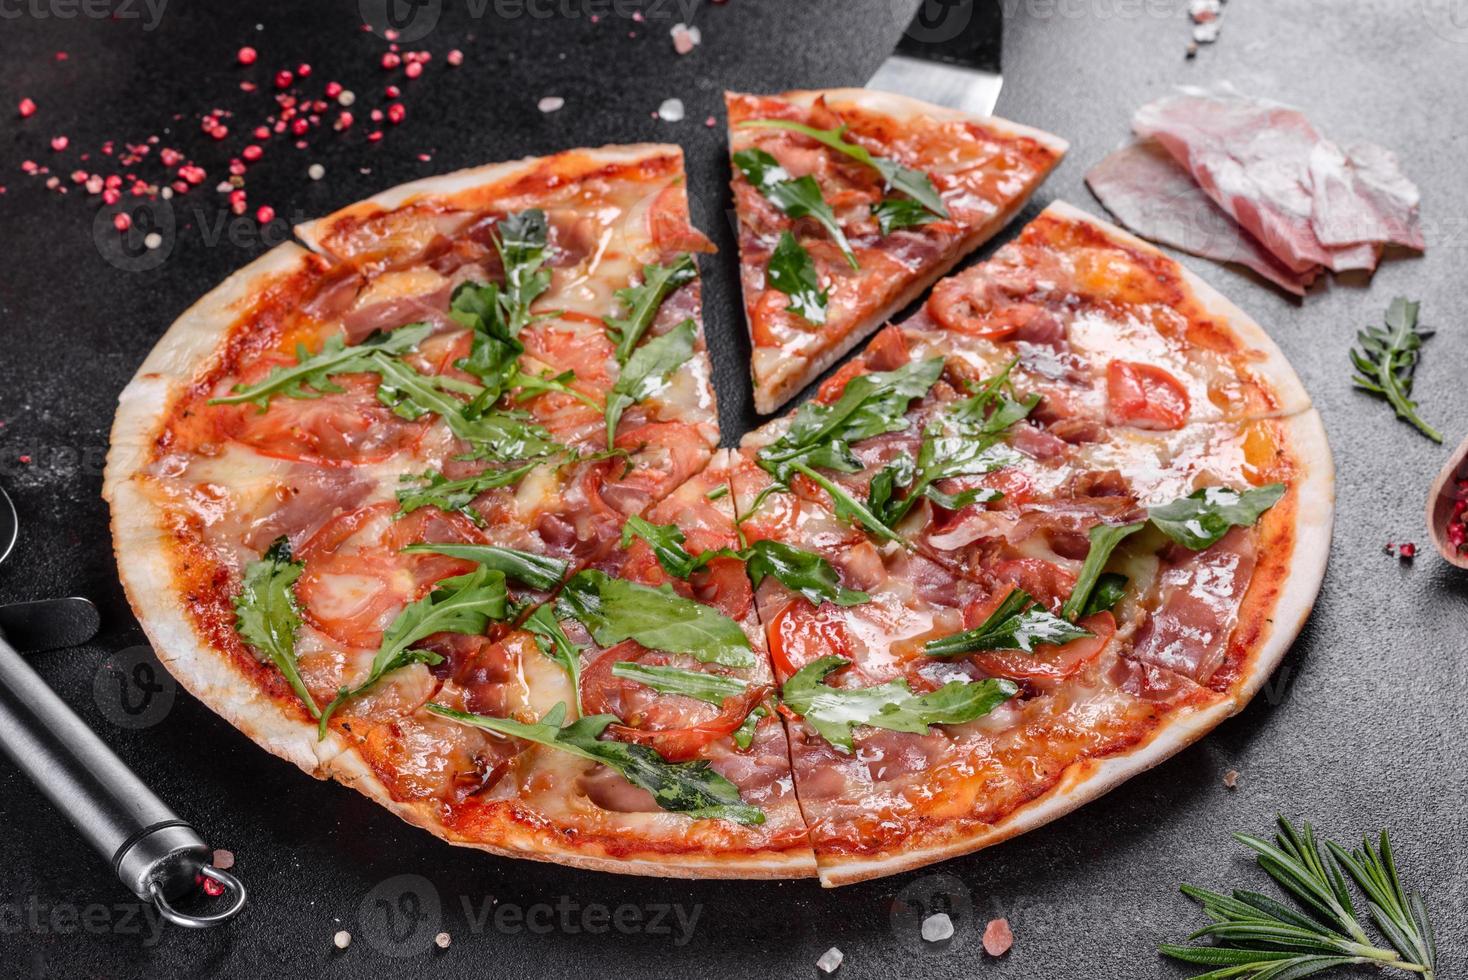 Pizza fresca al horno con rúcula, salami foto